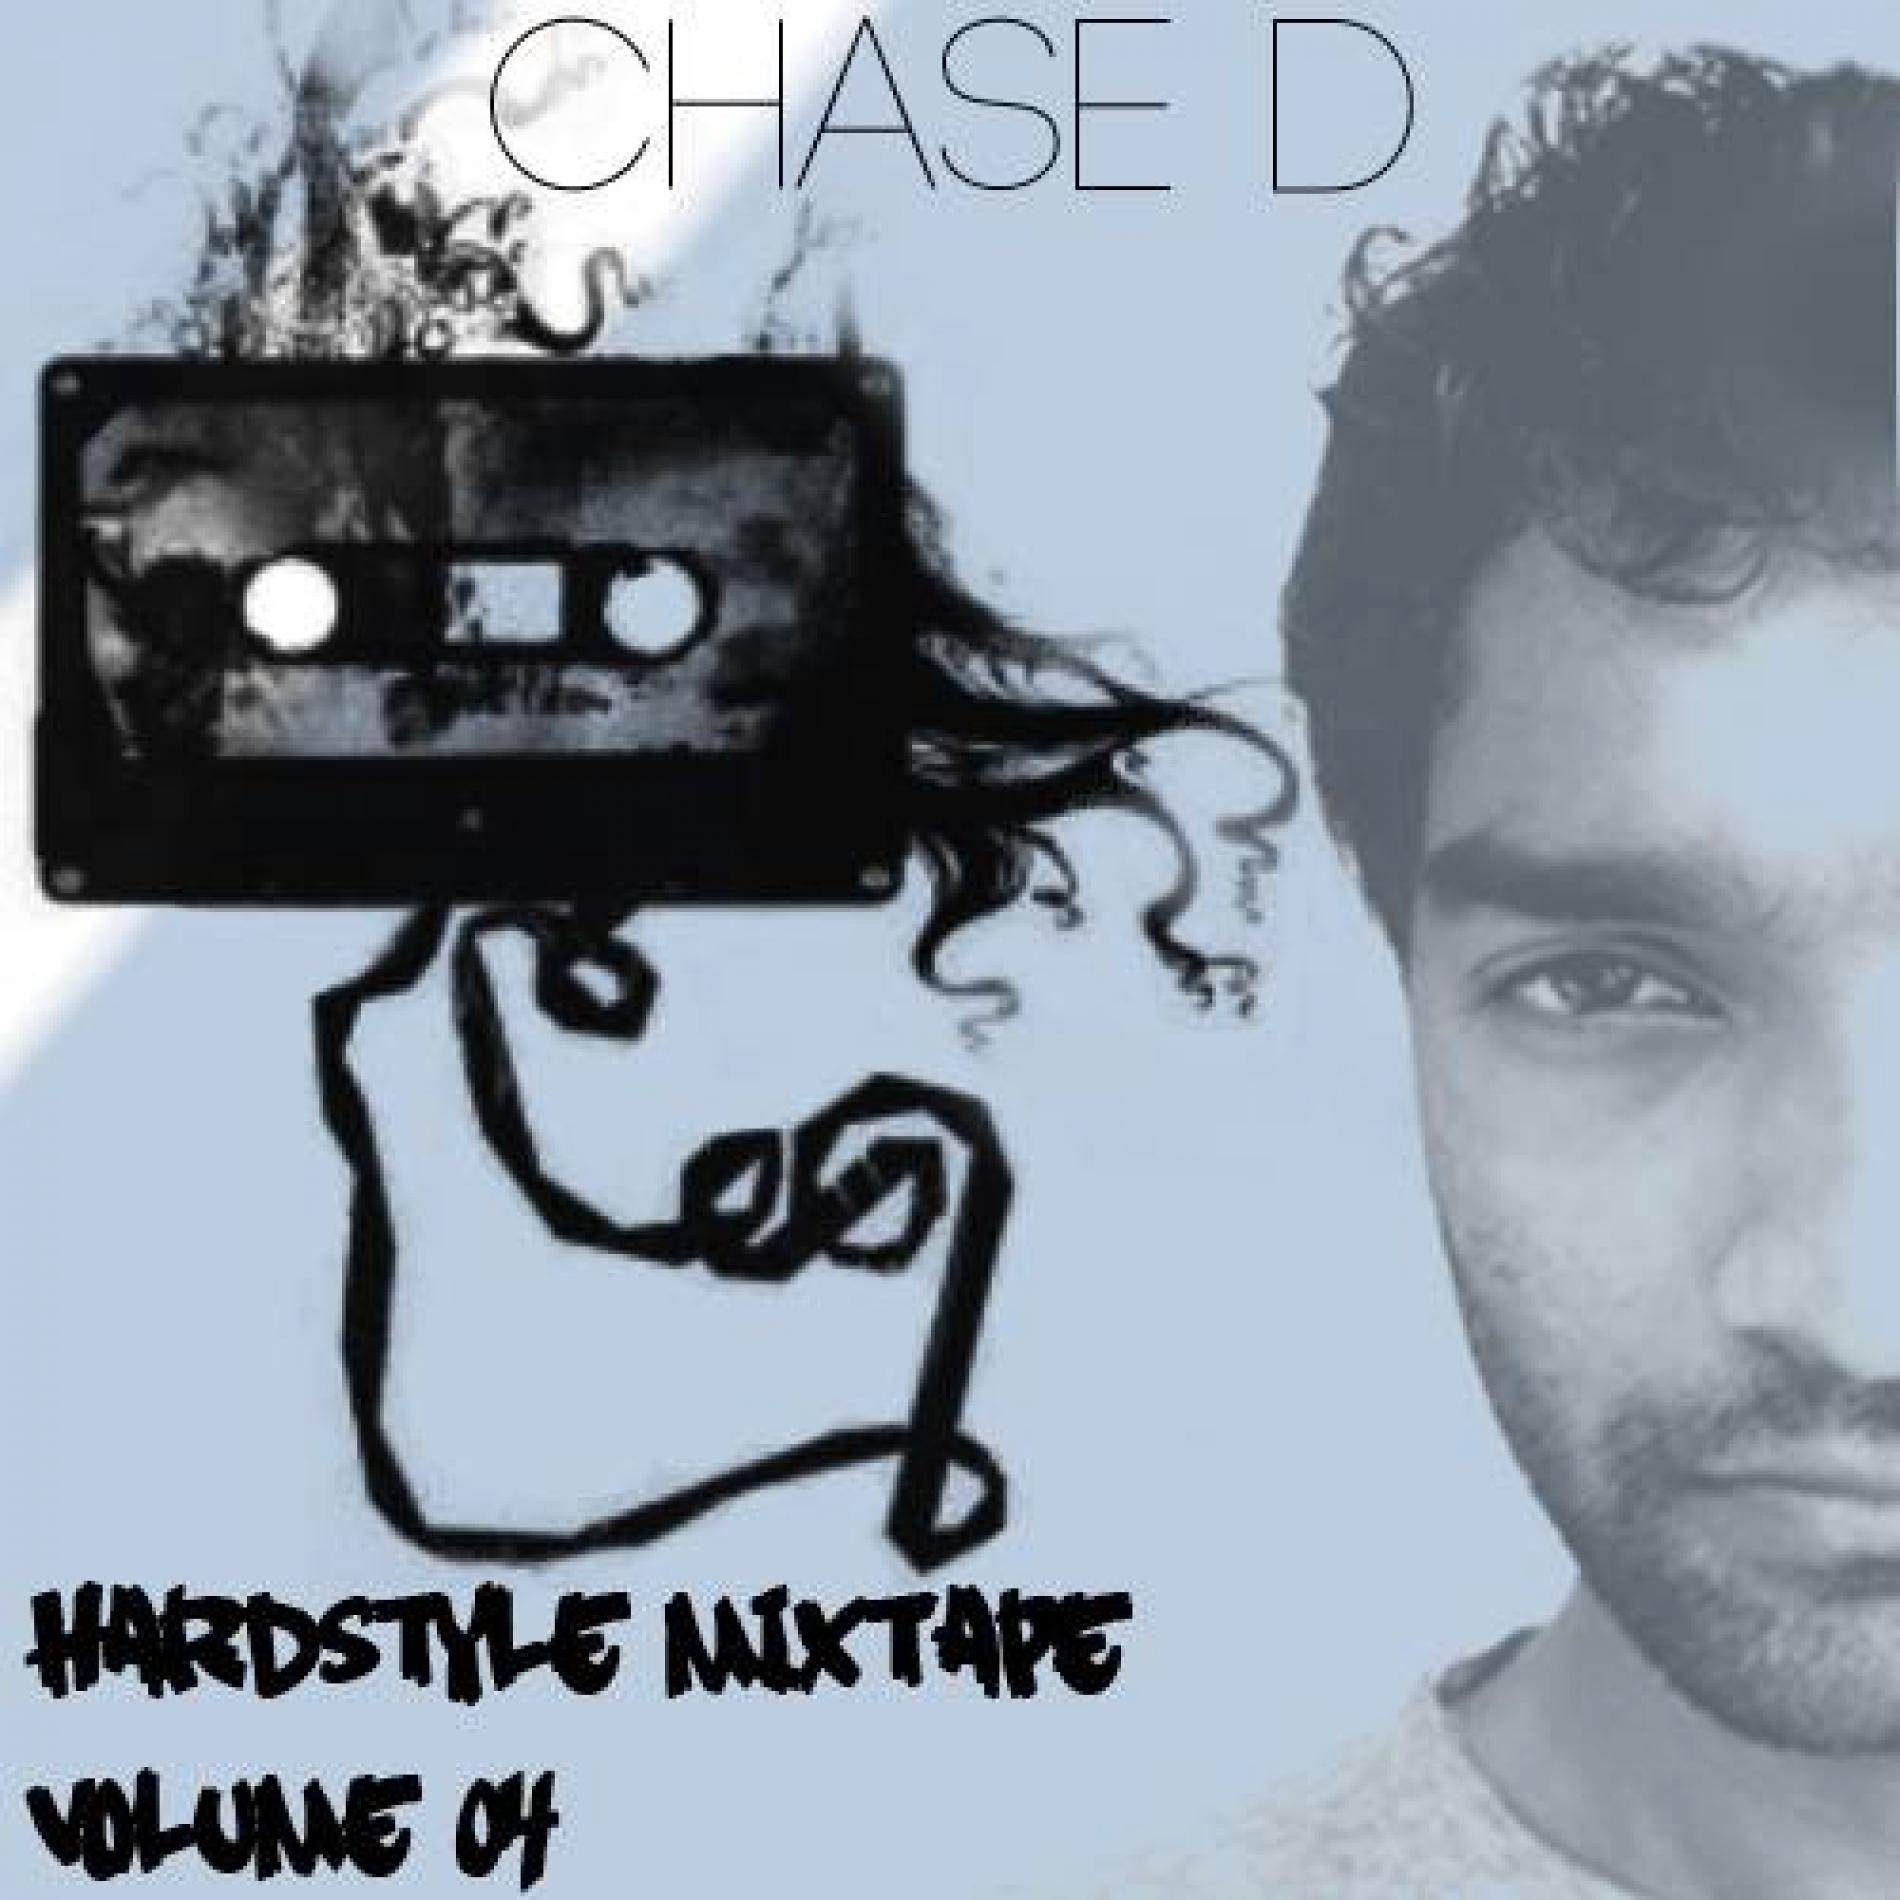 Chase D’s Hardstyle Mixtape Volume 04